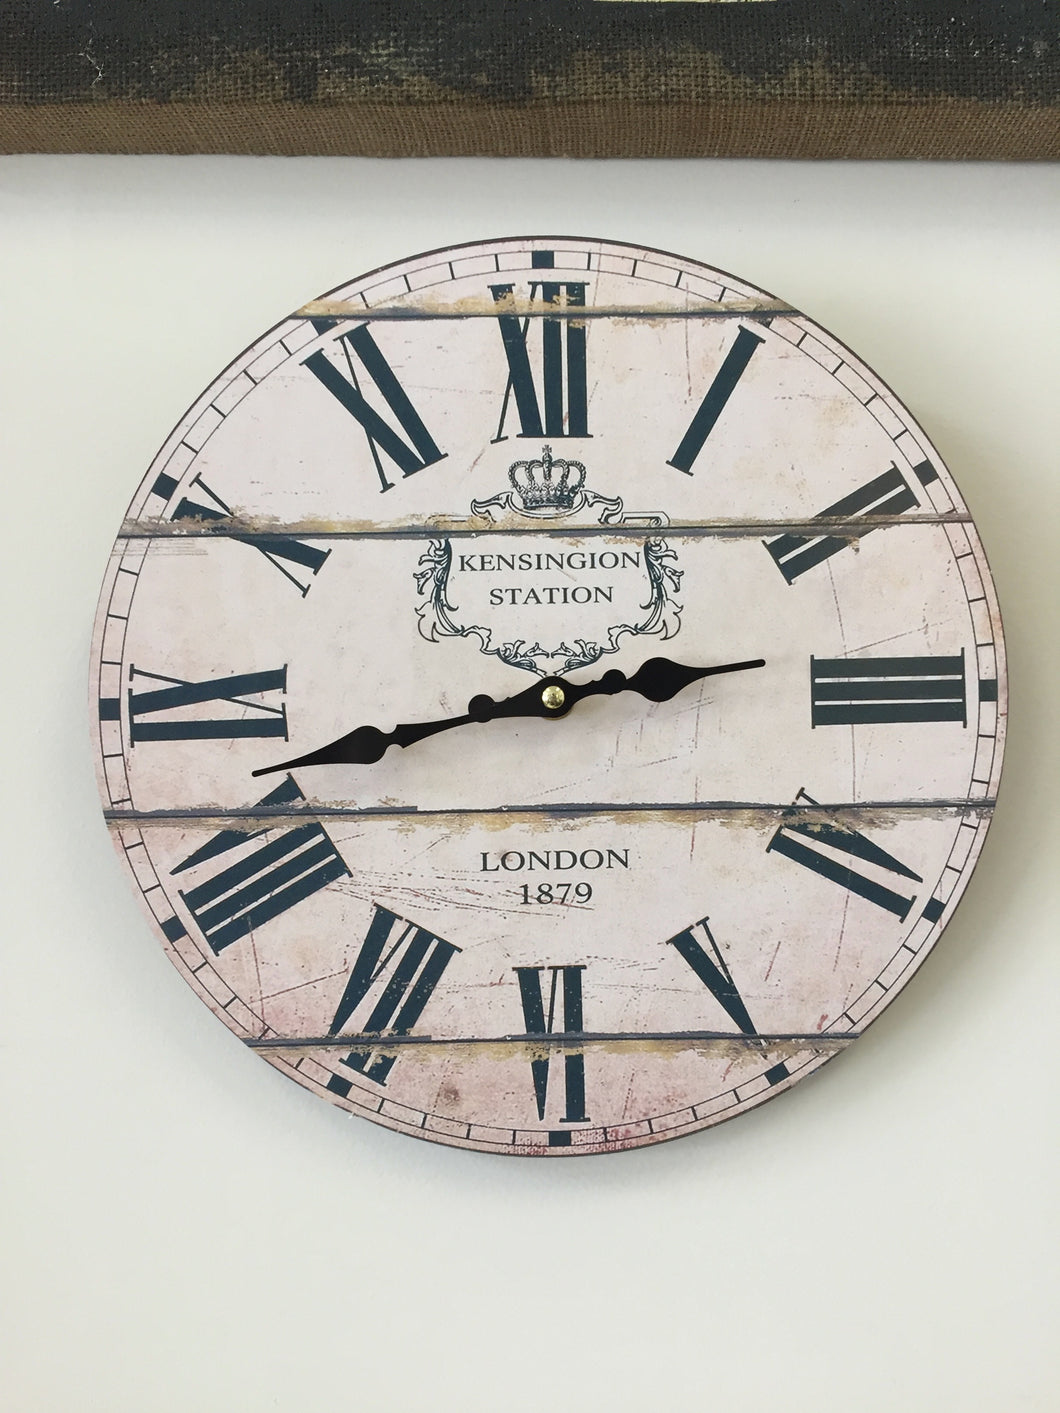 'Kensington Station' clock